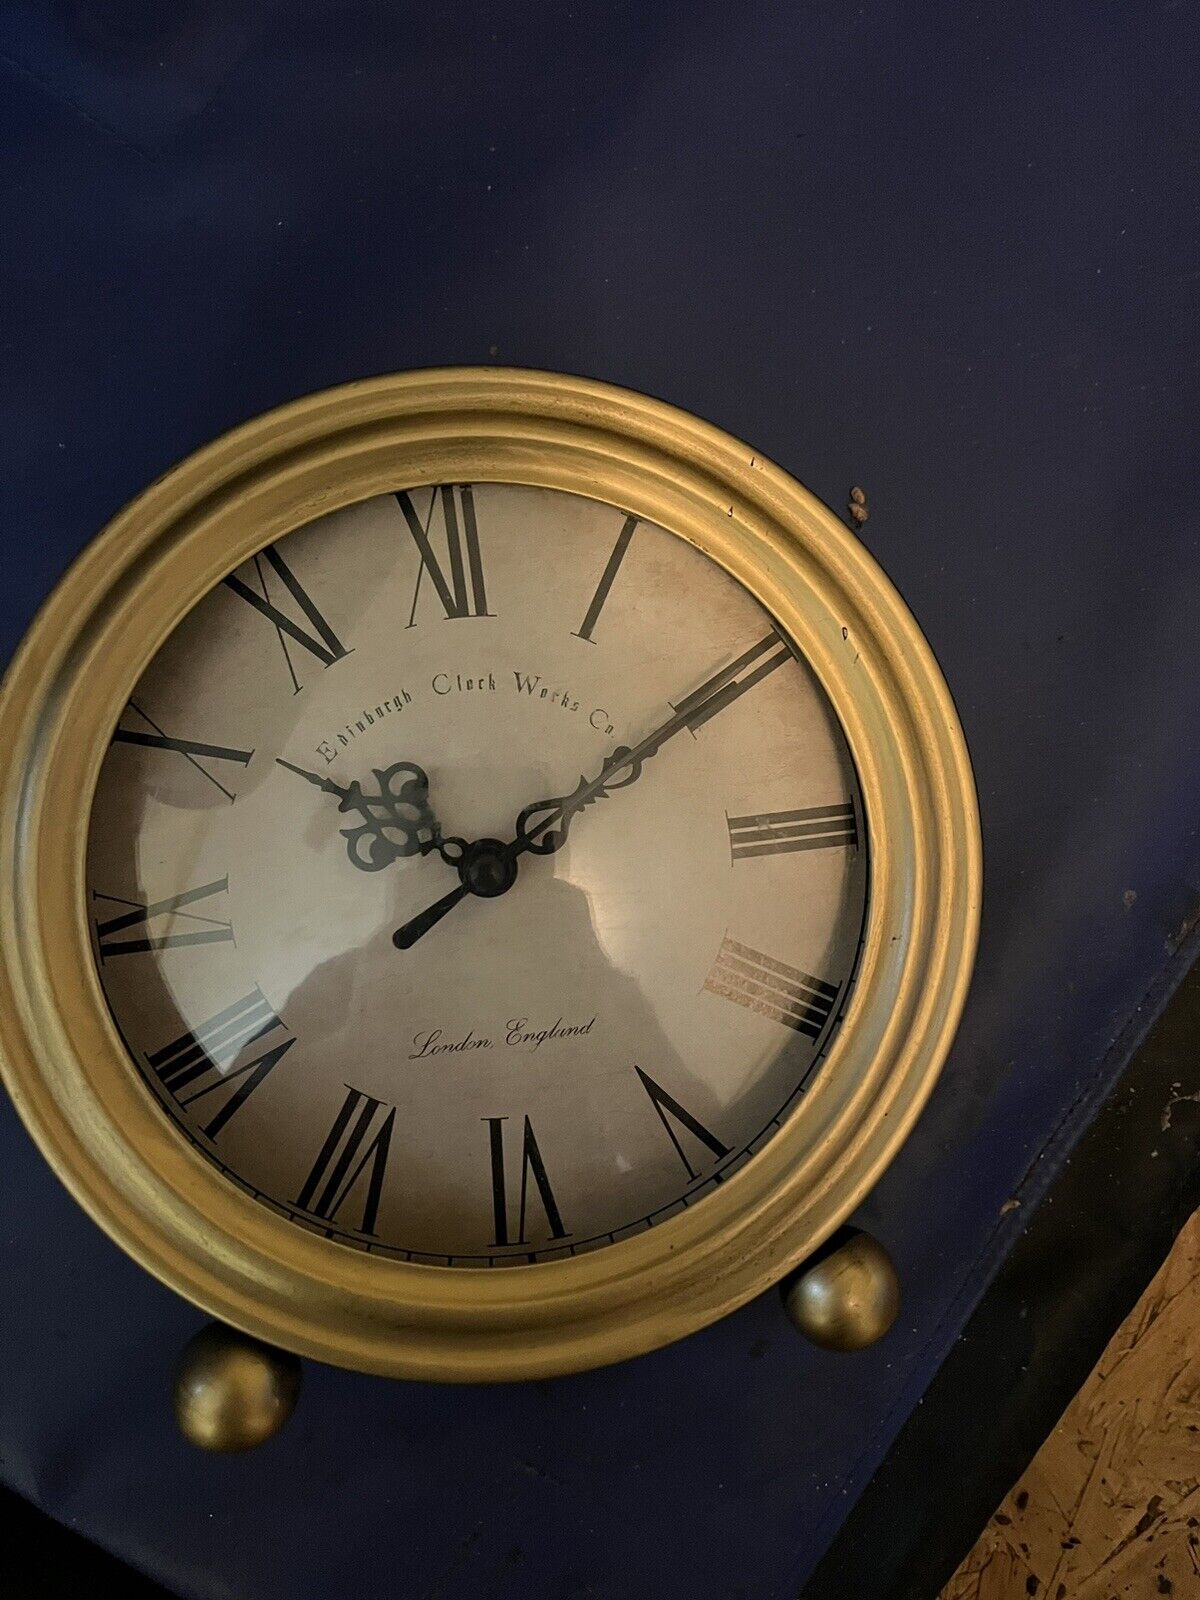 Edinburgh Clock Works Co. Clock, London England.